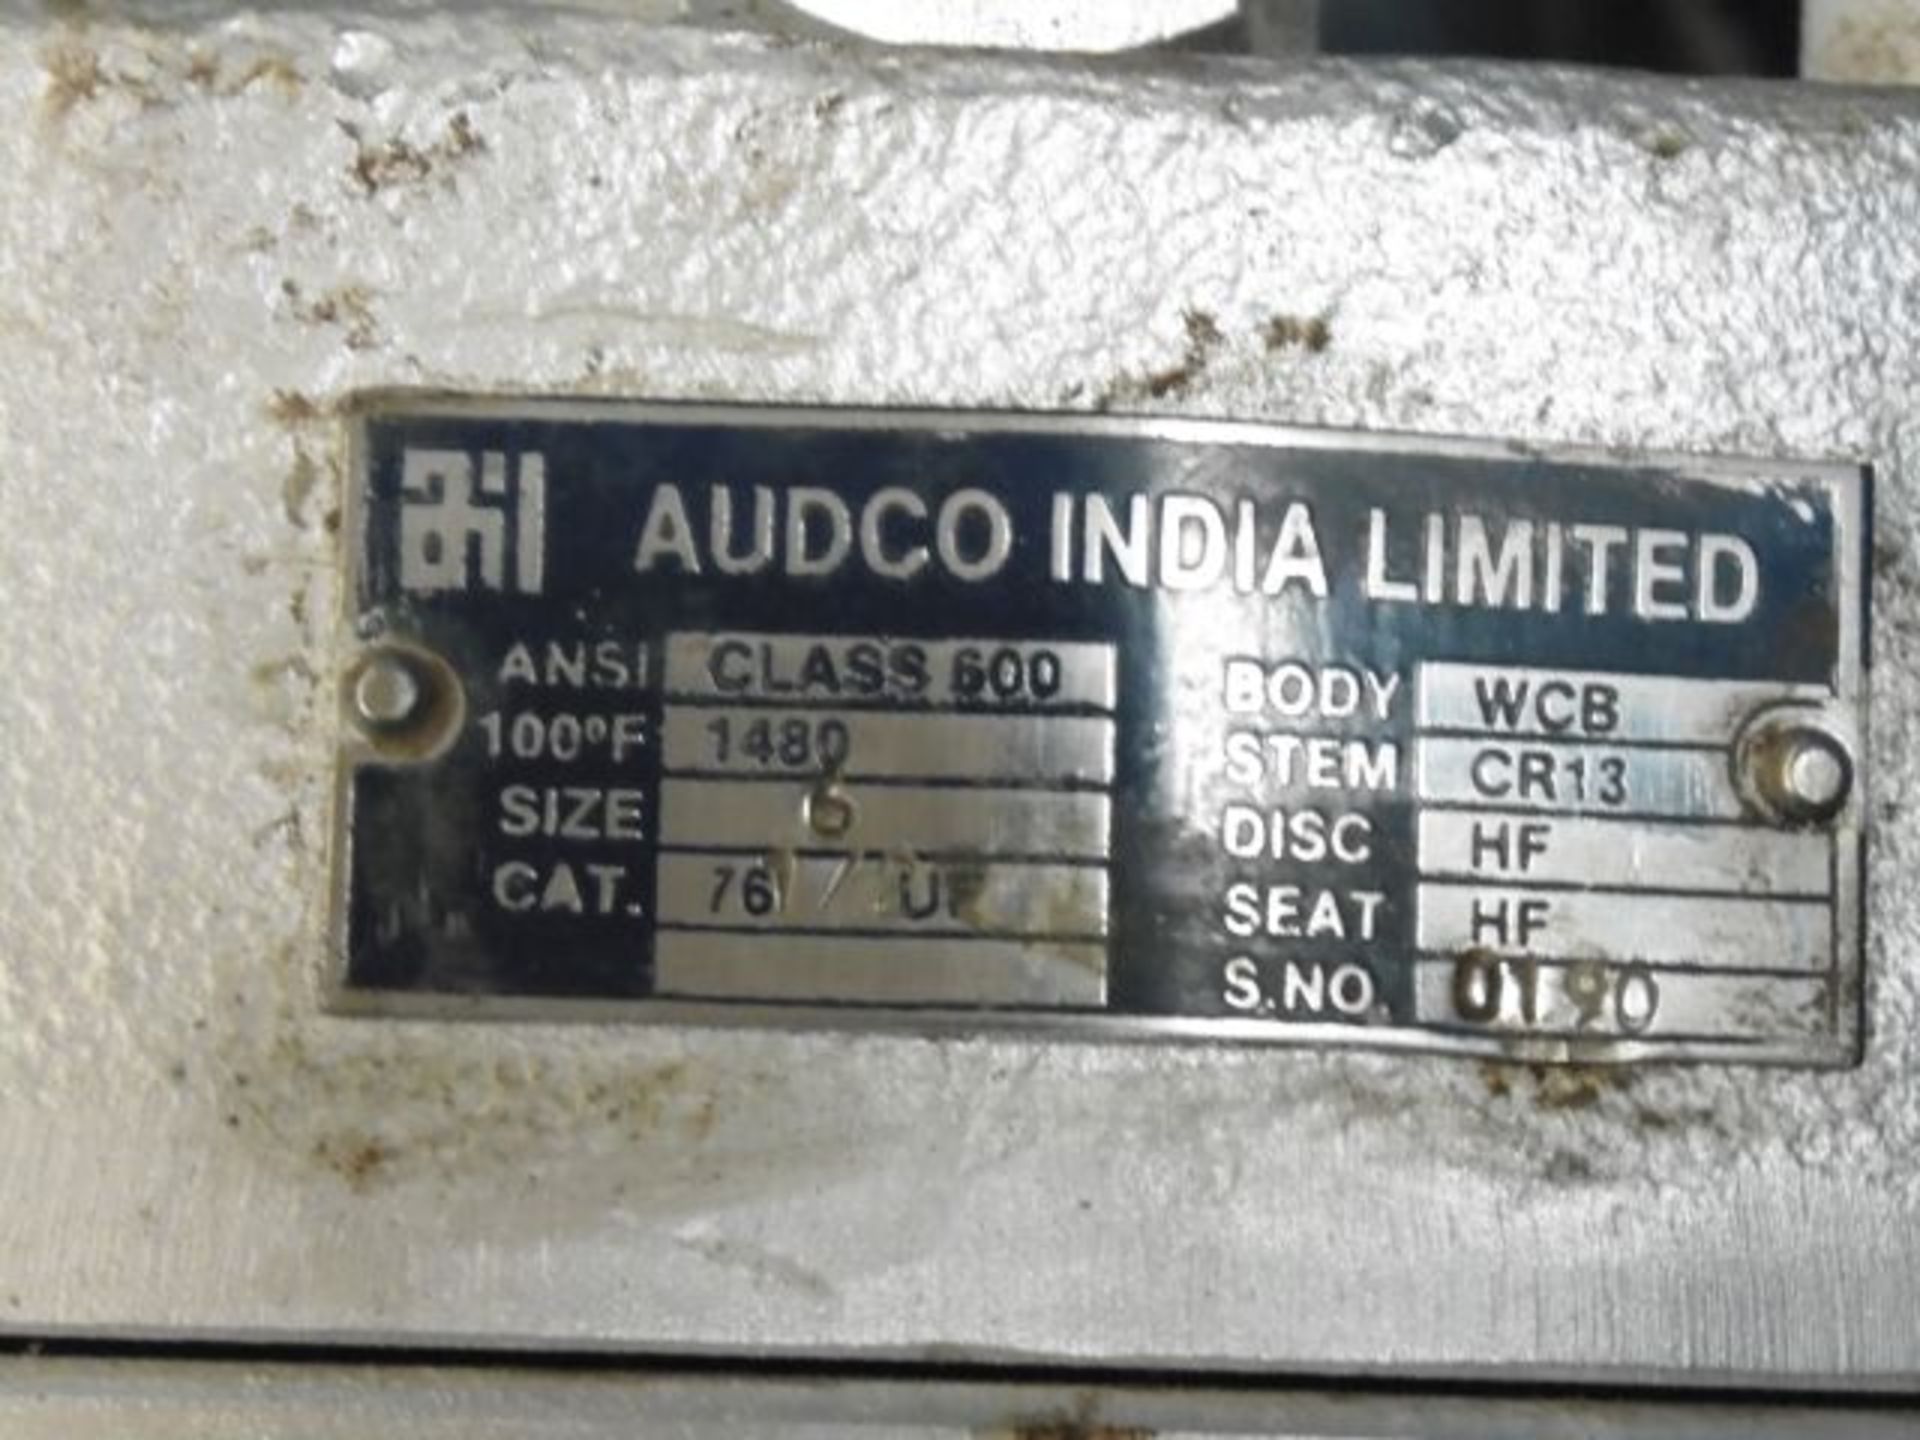 2 x Unused Audco India Ltd 6''/600 Wheeled Gate Valves; Category 761/2JF; Body/Stem WCB CR13 c/w 2 x - Image 2 of 2